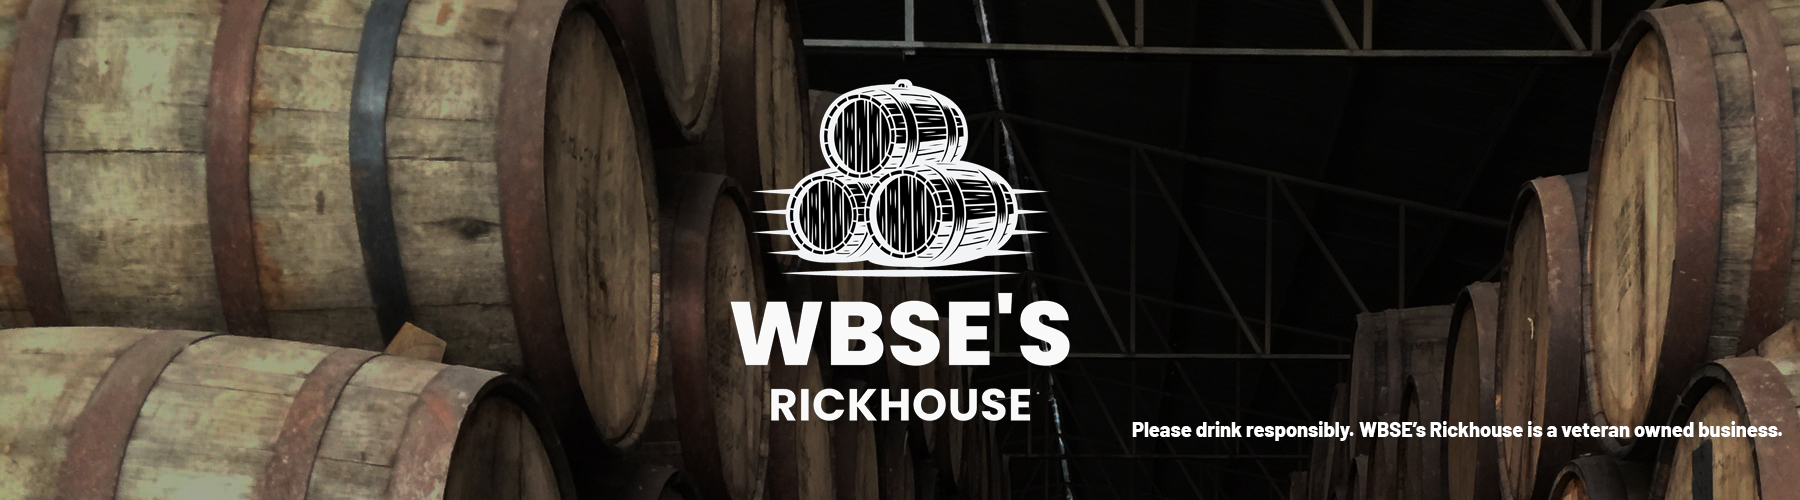 WBSE'S Rickhouse logo